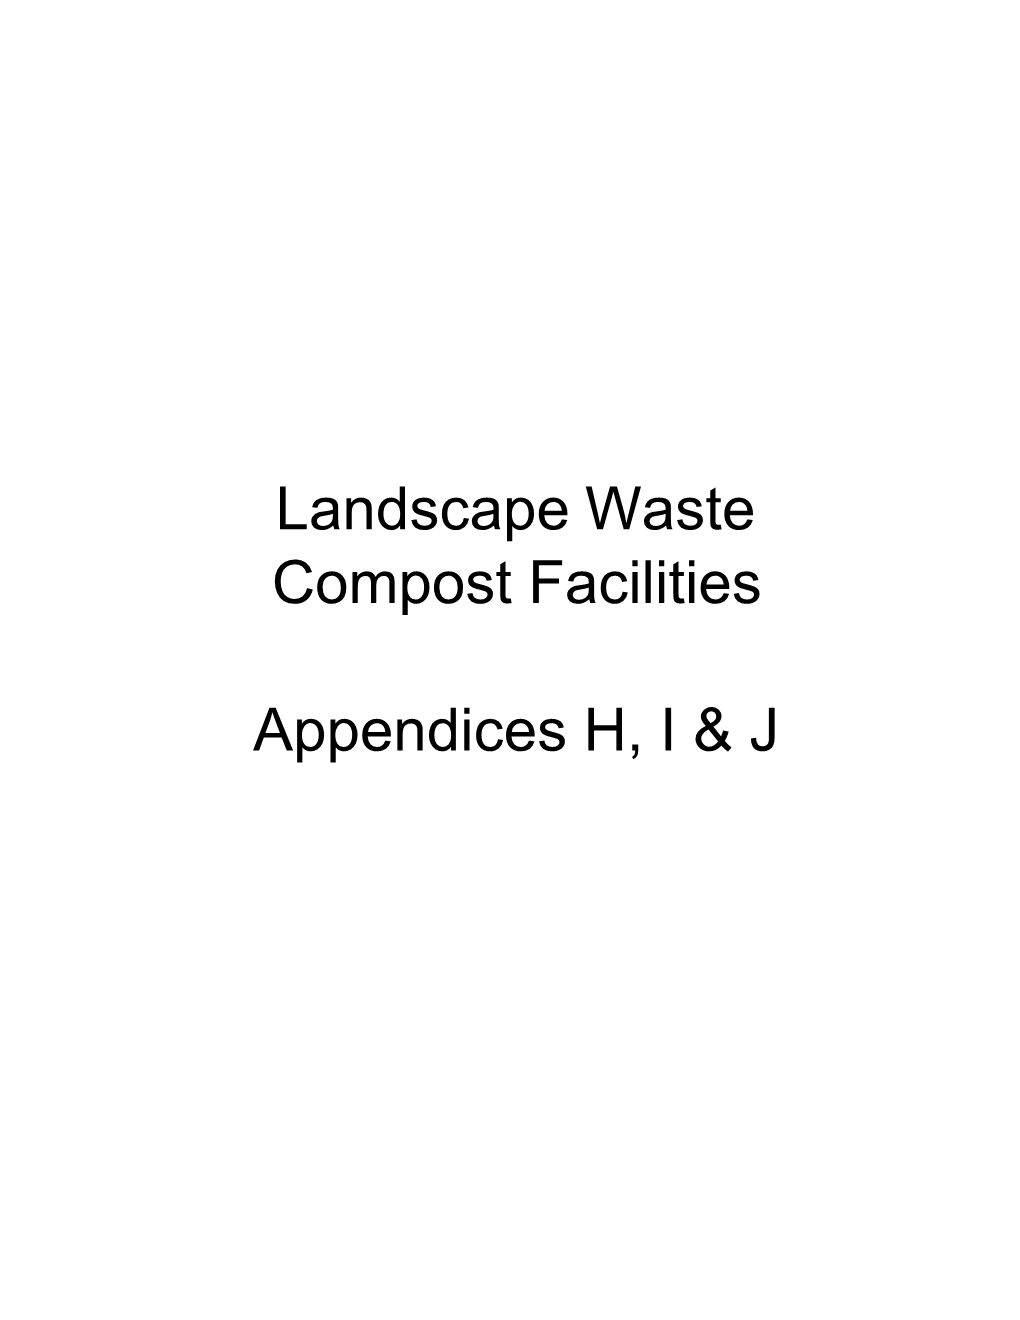 Landscape Waste Compost Facilities Appendices H, I & J